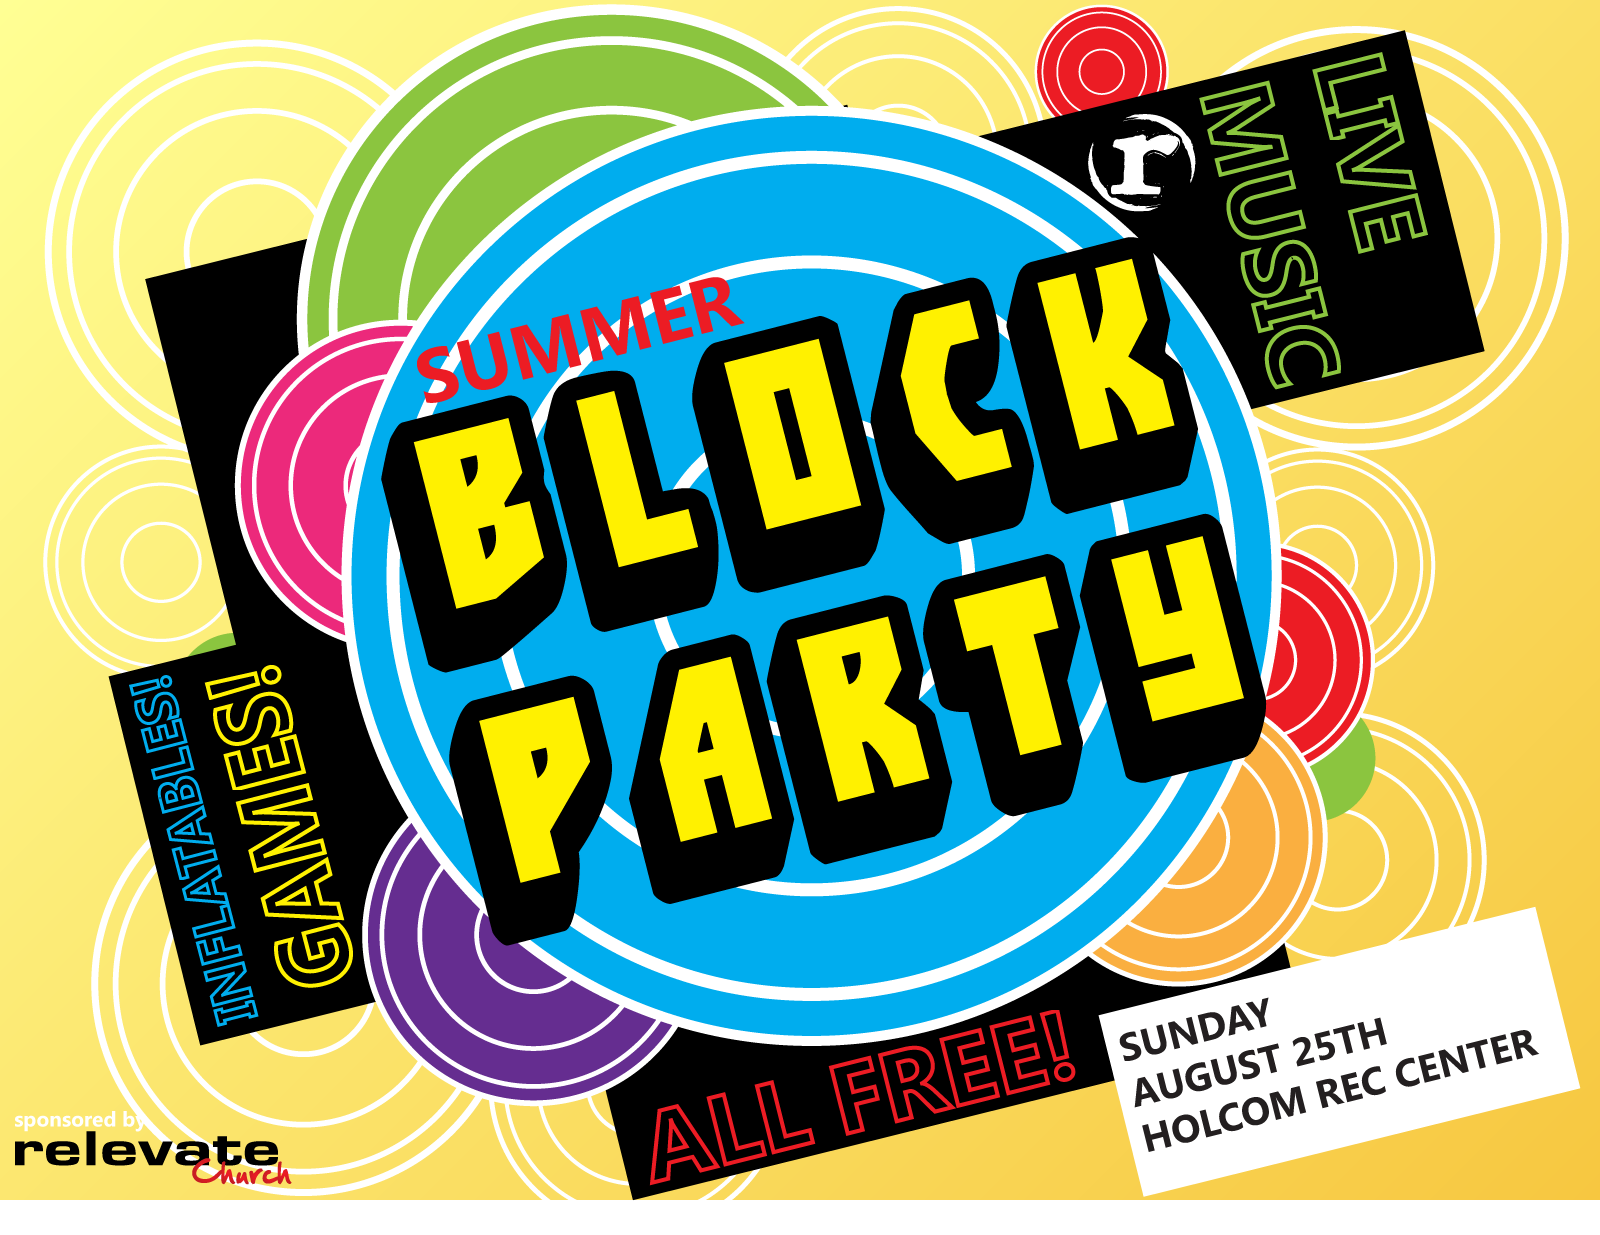 Block Party Logo